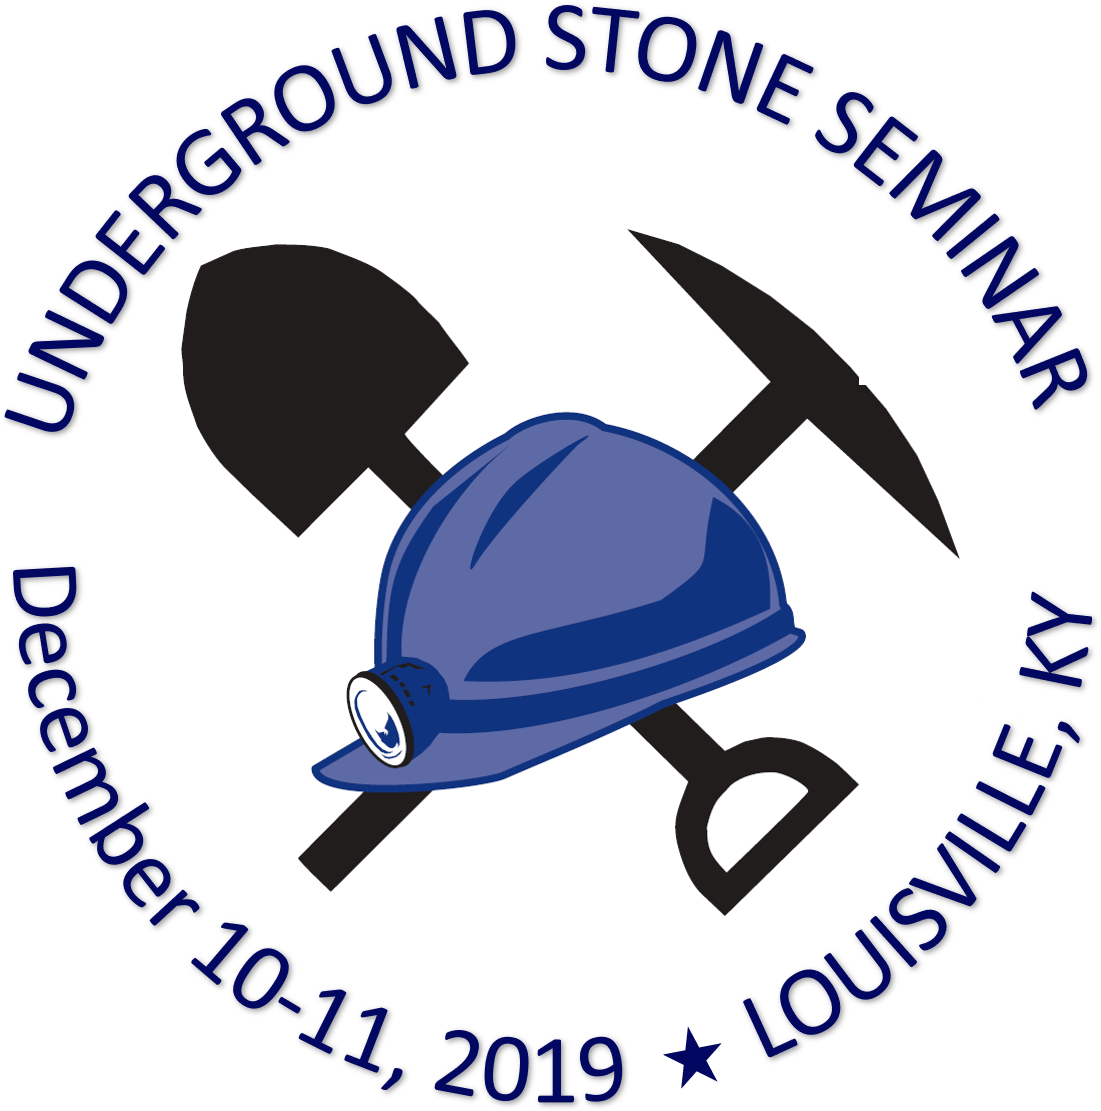 logo for 2019 underground stone seminar